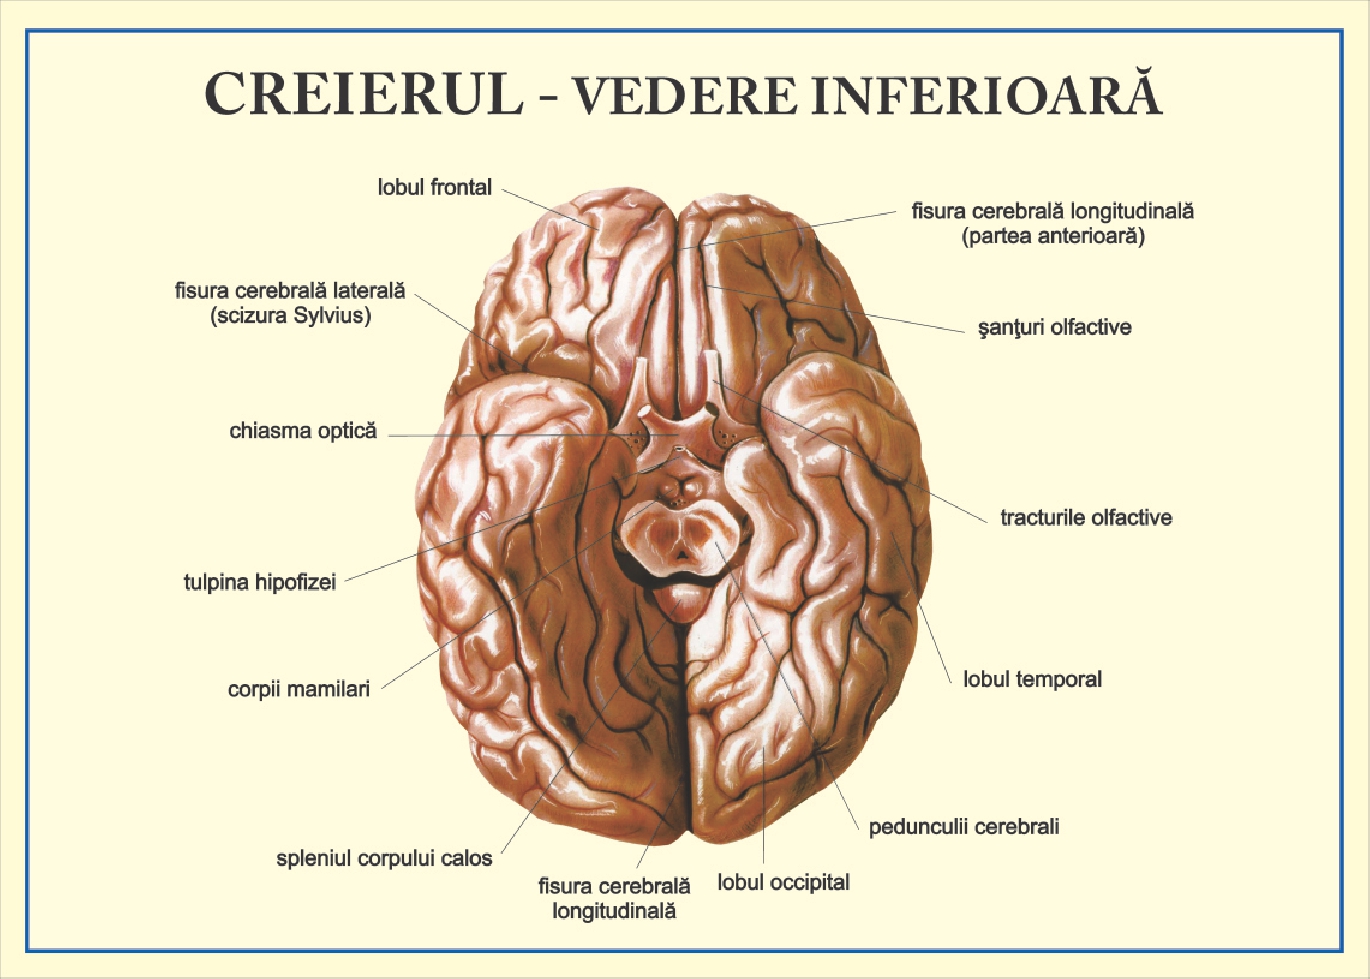 Creierul - vedere inferioara